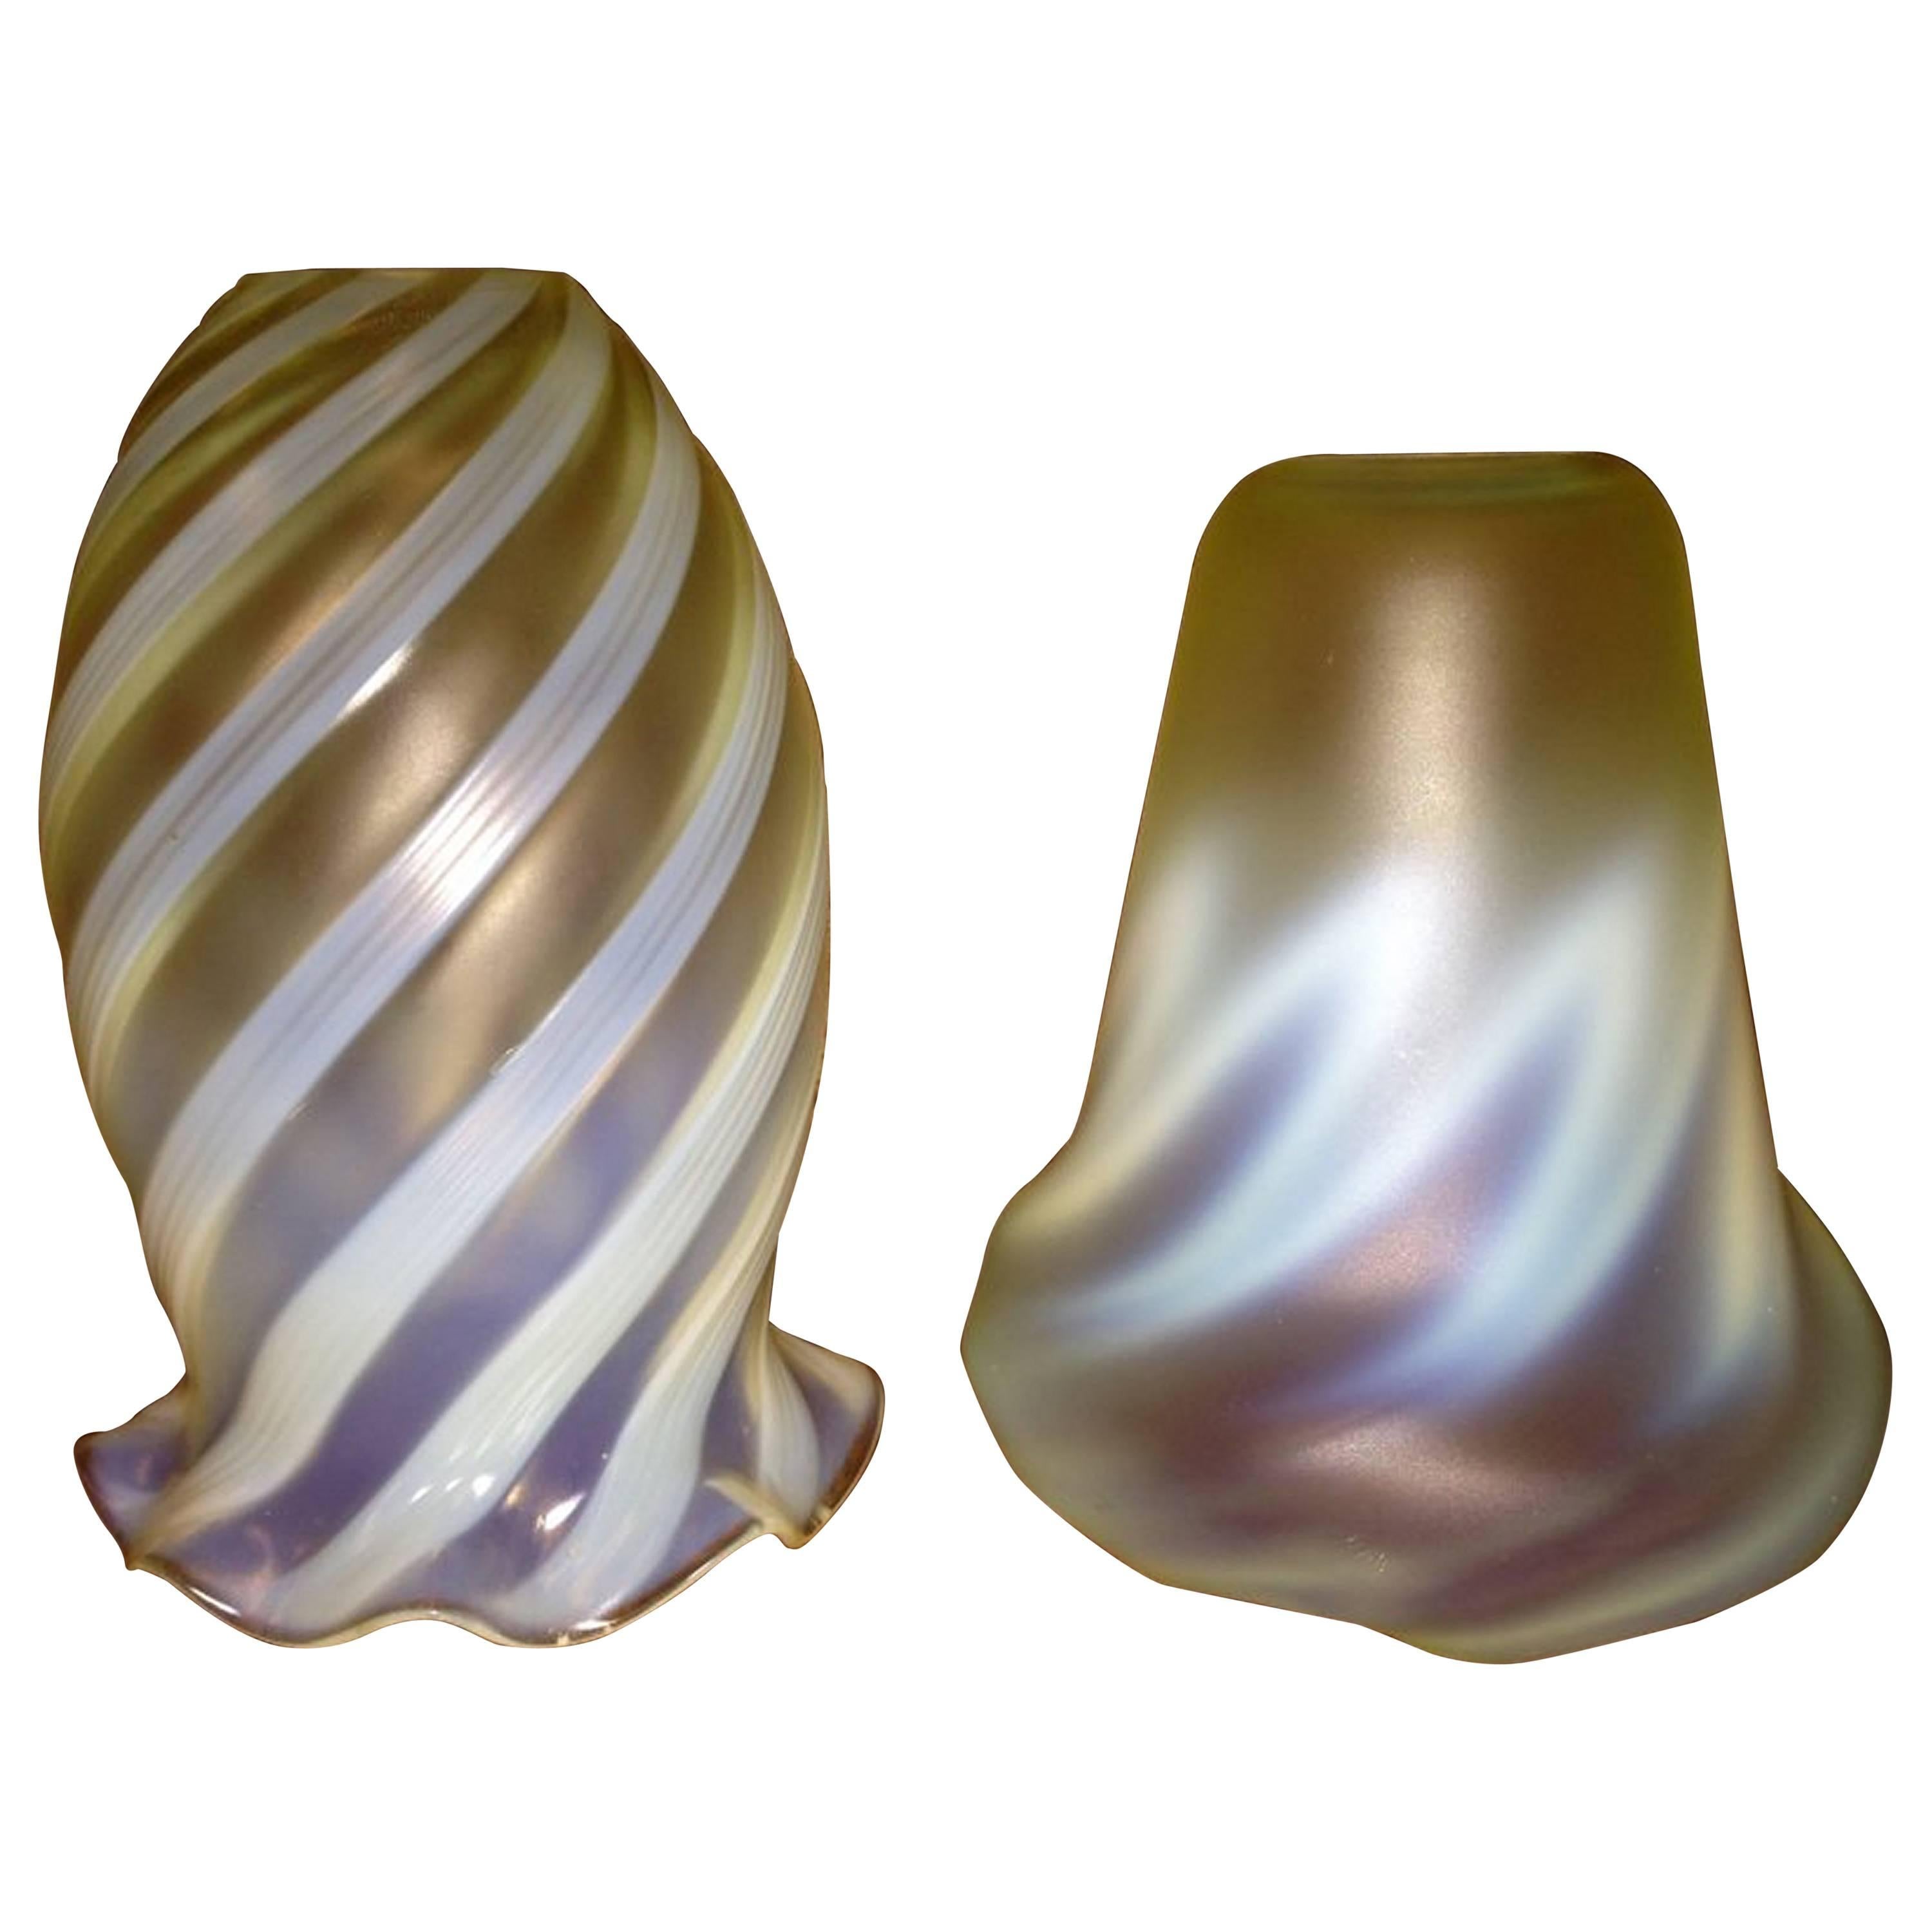 One Arts & Crafts Vaseline/Uranium Glass Shades, One Swirl, One Zigzag Patterned For Sale